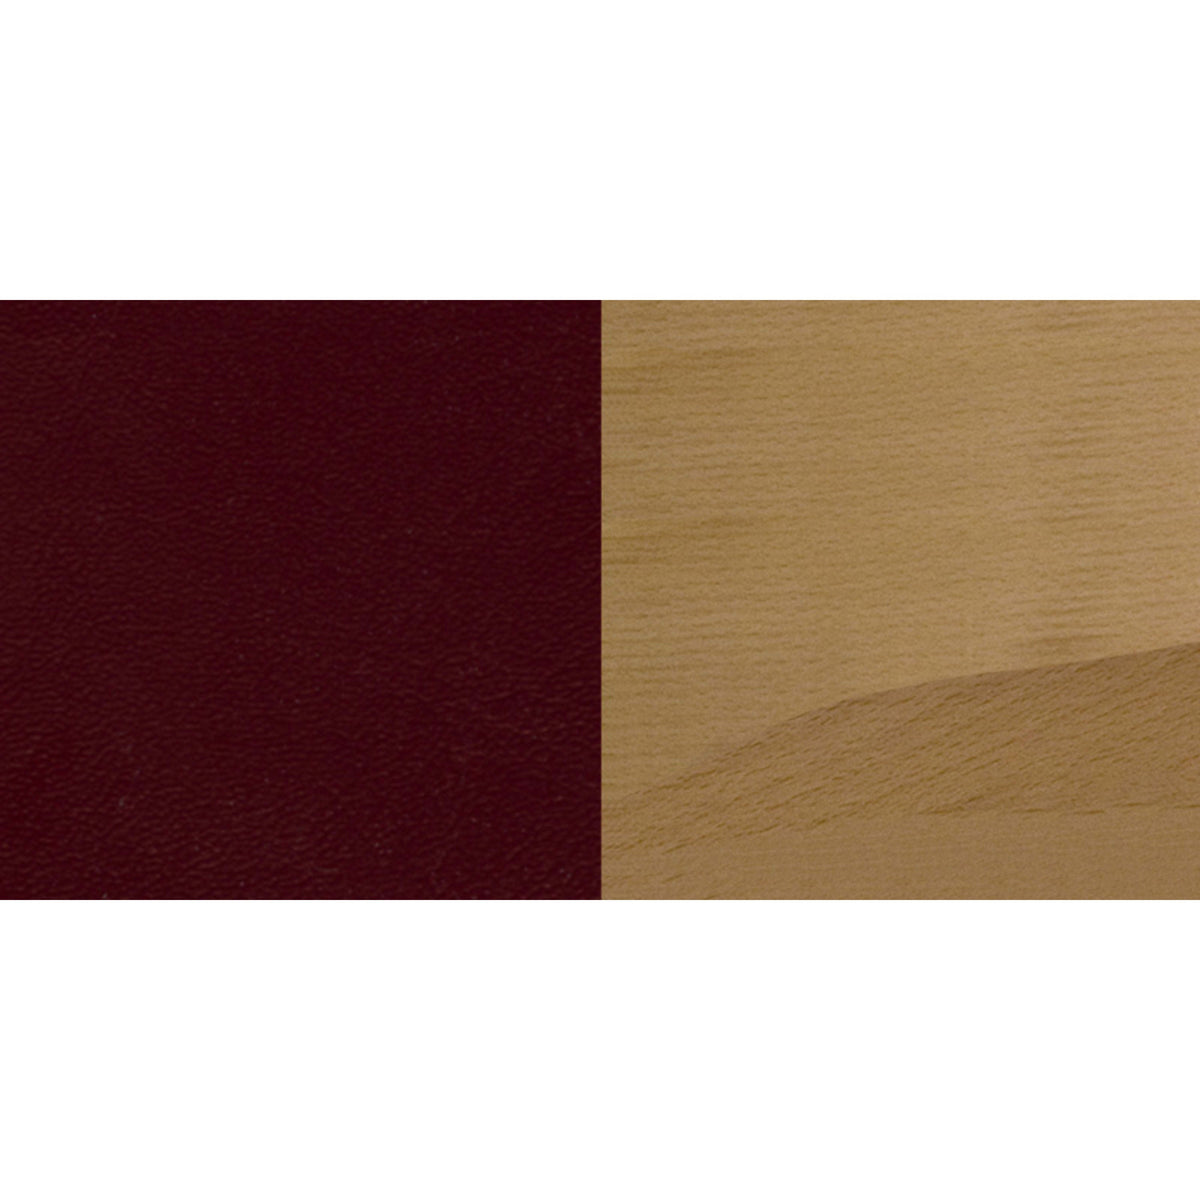 Burgundy Vinyl Seat/Natural Wood Frame |#| Vertical Slat Back Natural Wood Restaurant Chair - Burgundy Vinyl Seat